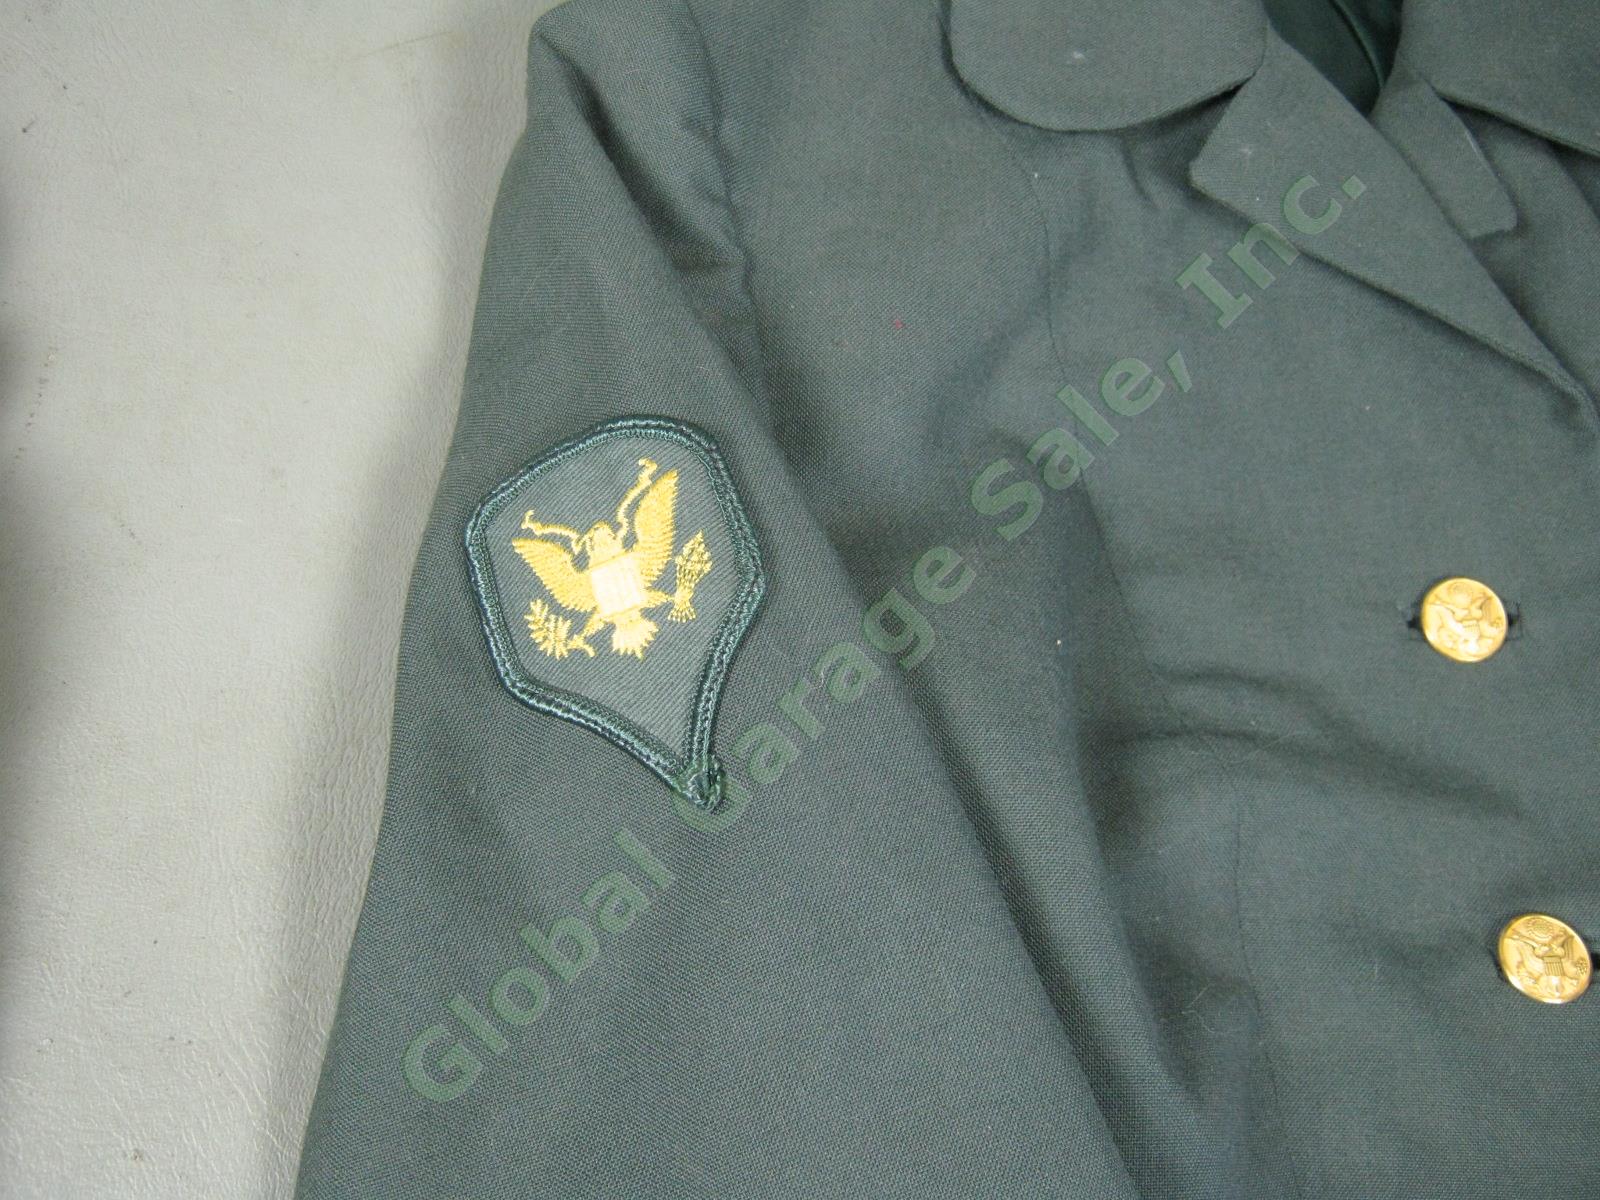 Vtg Womens Army Corps WAC Uniform Lot Green Cord Skirt Jacket Cap AG-344 Dress 4